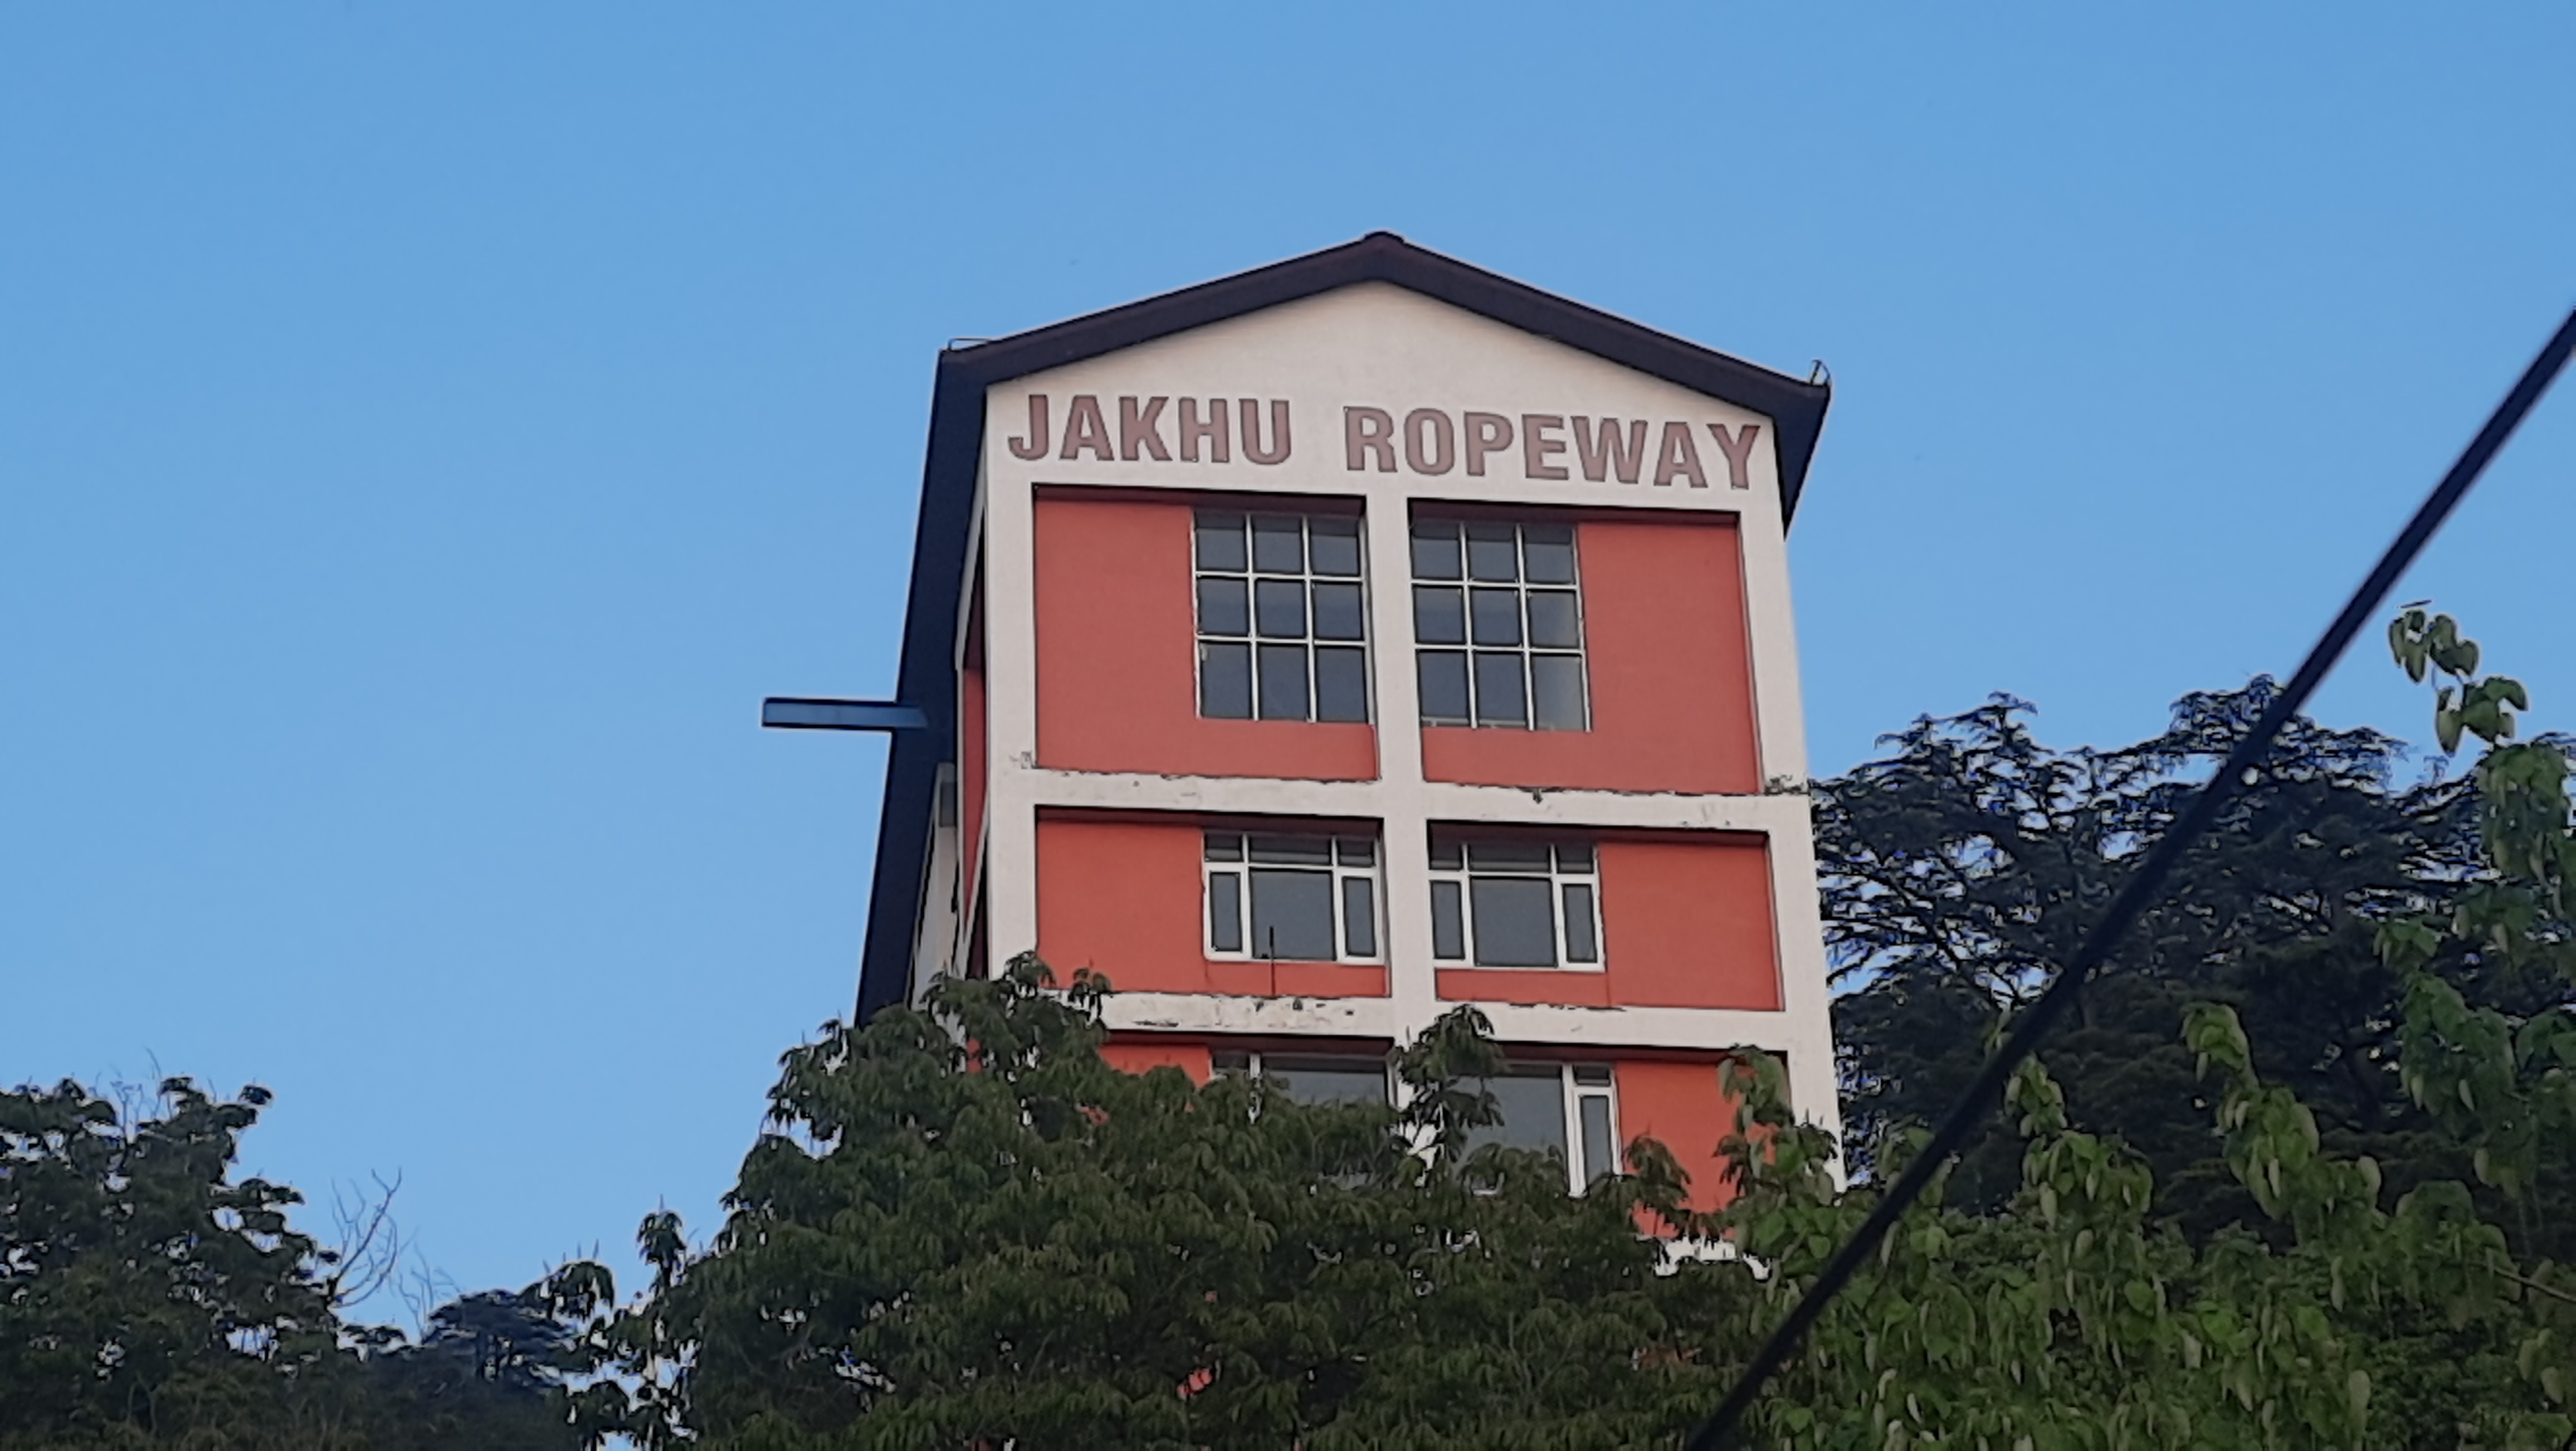 Jakhu Ropeway of Shimla.